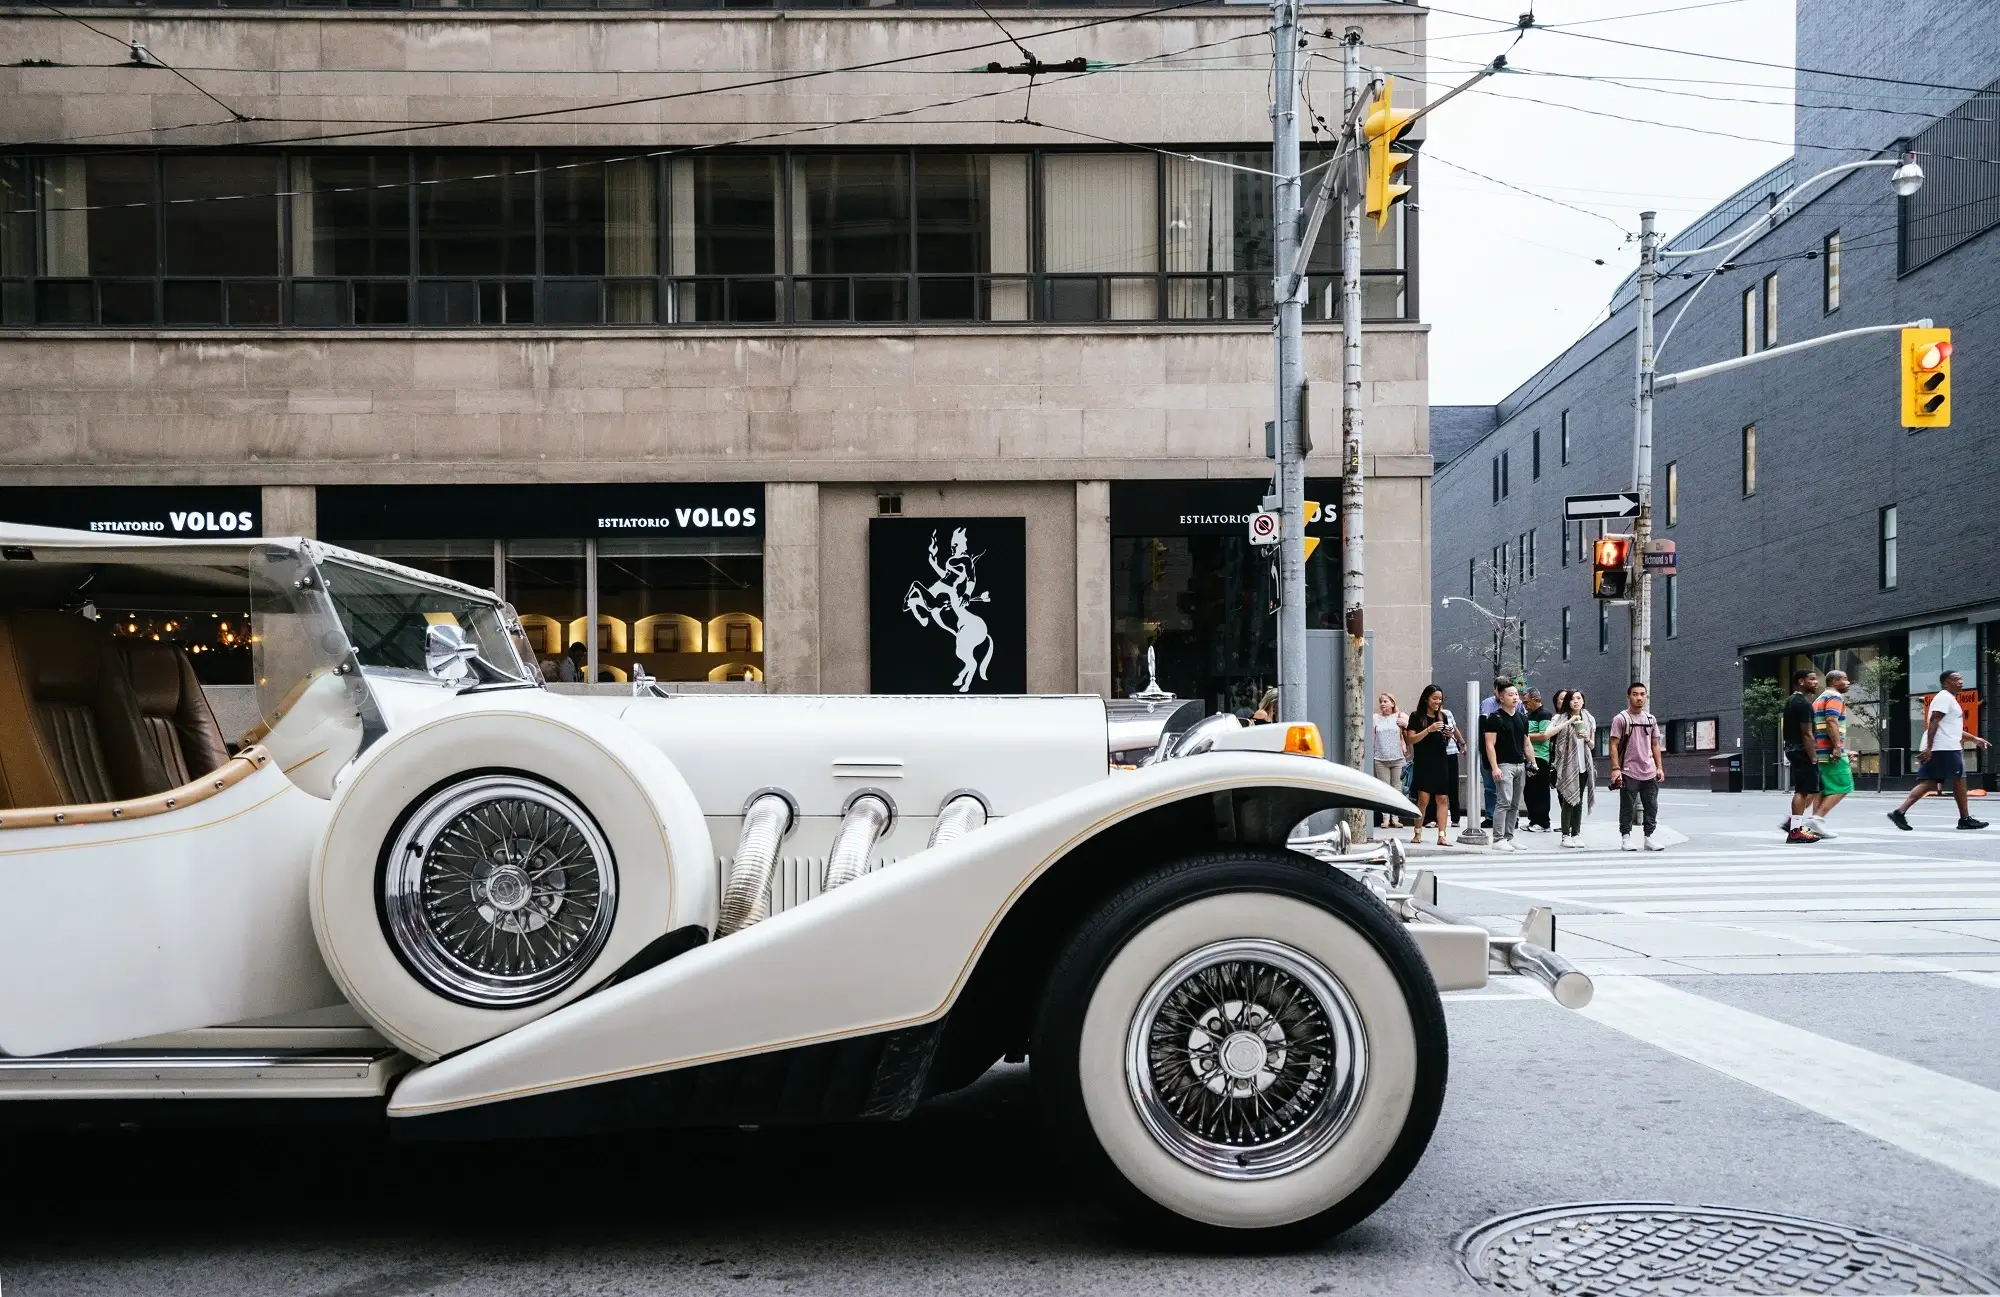 A white vintage luxury car.